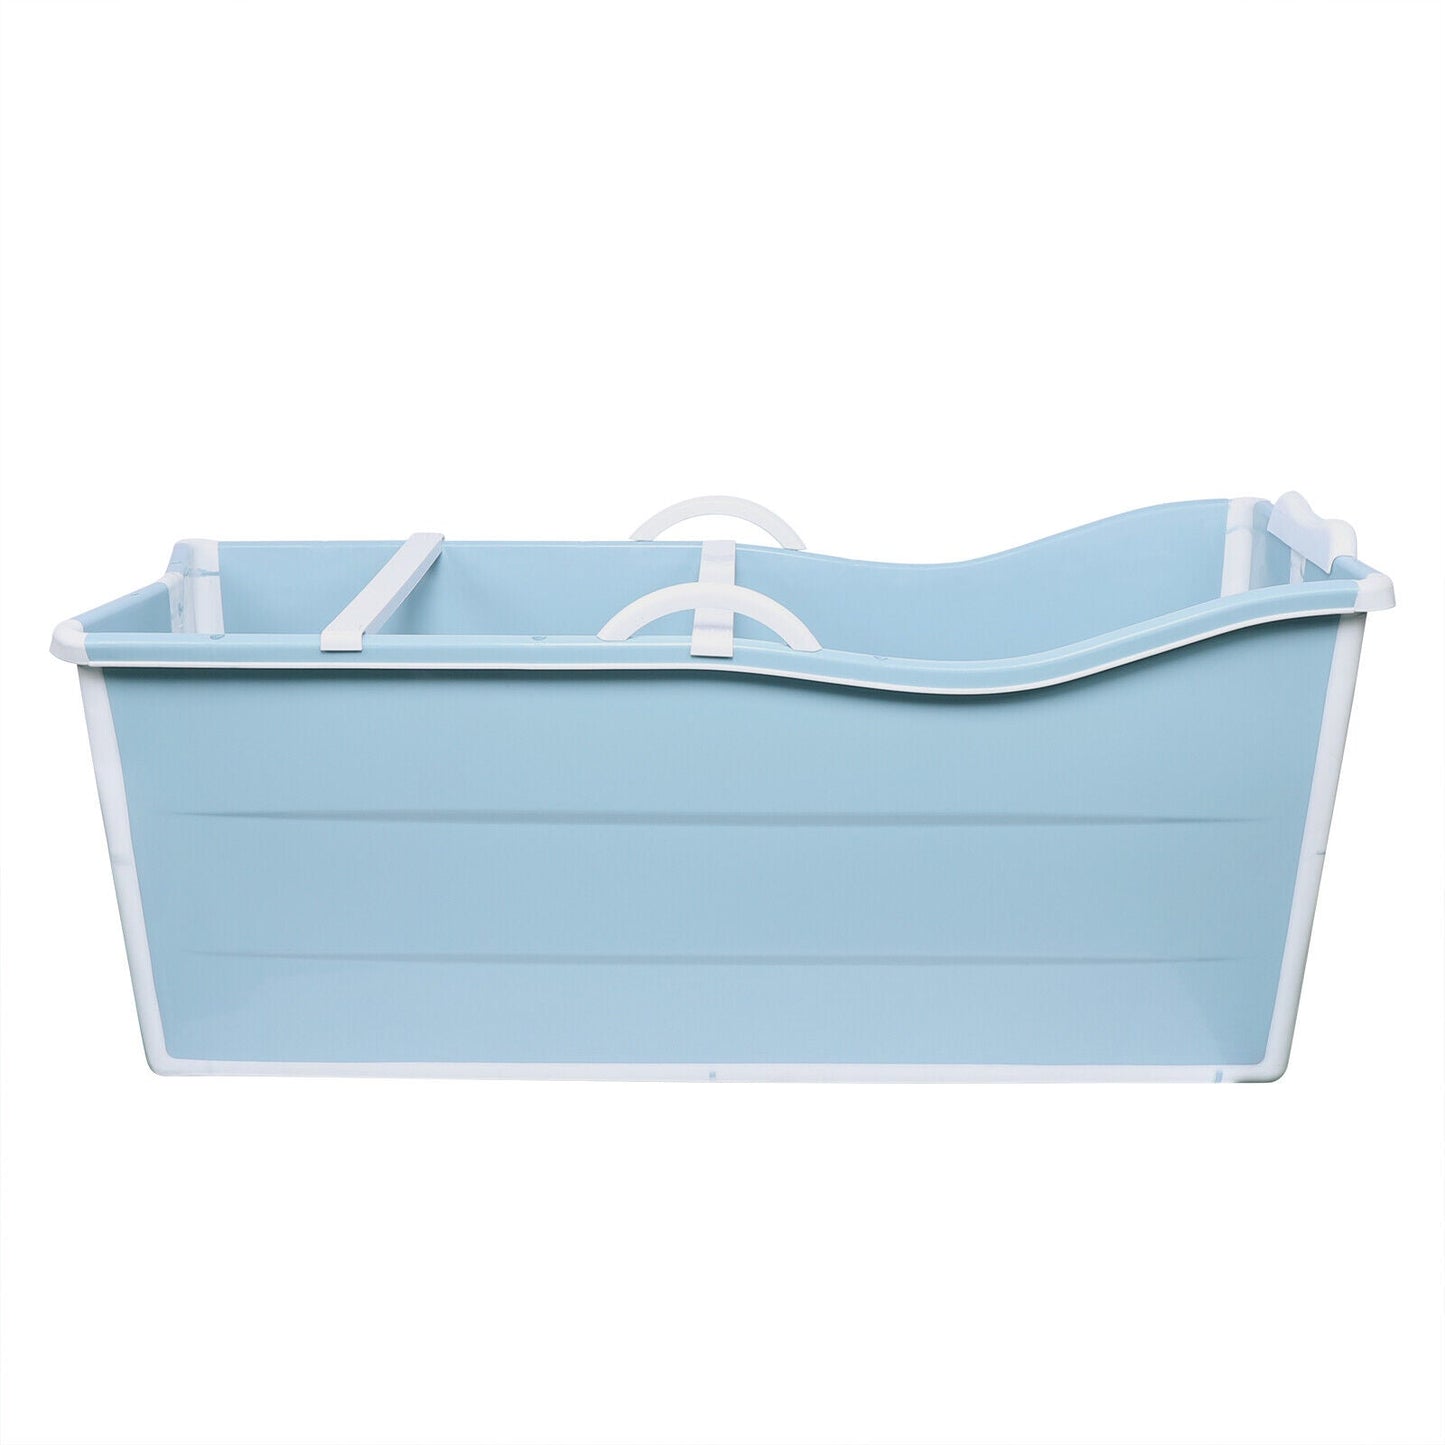 Portable Large Capacity Adults Collapsible Soaking Bathtub